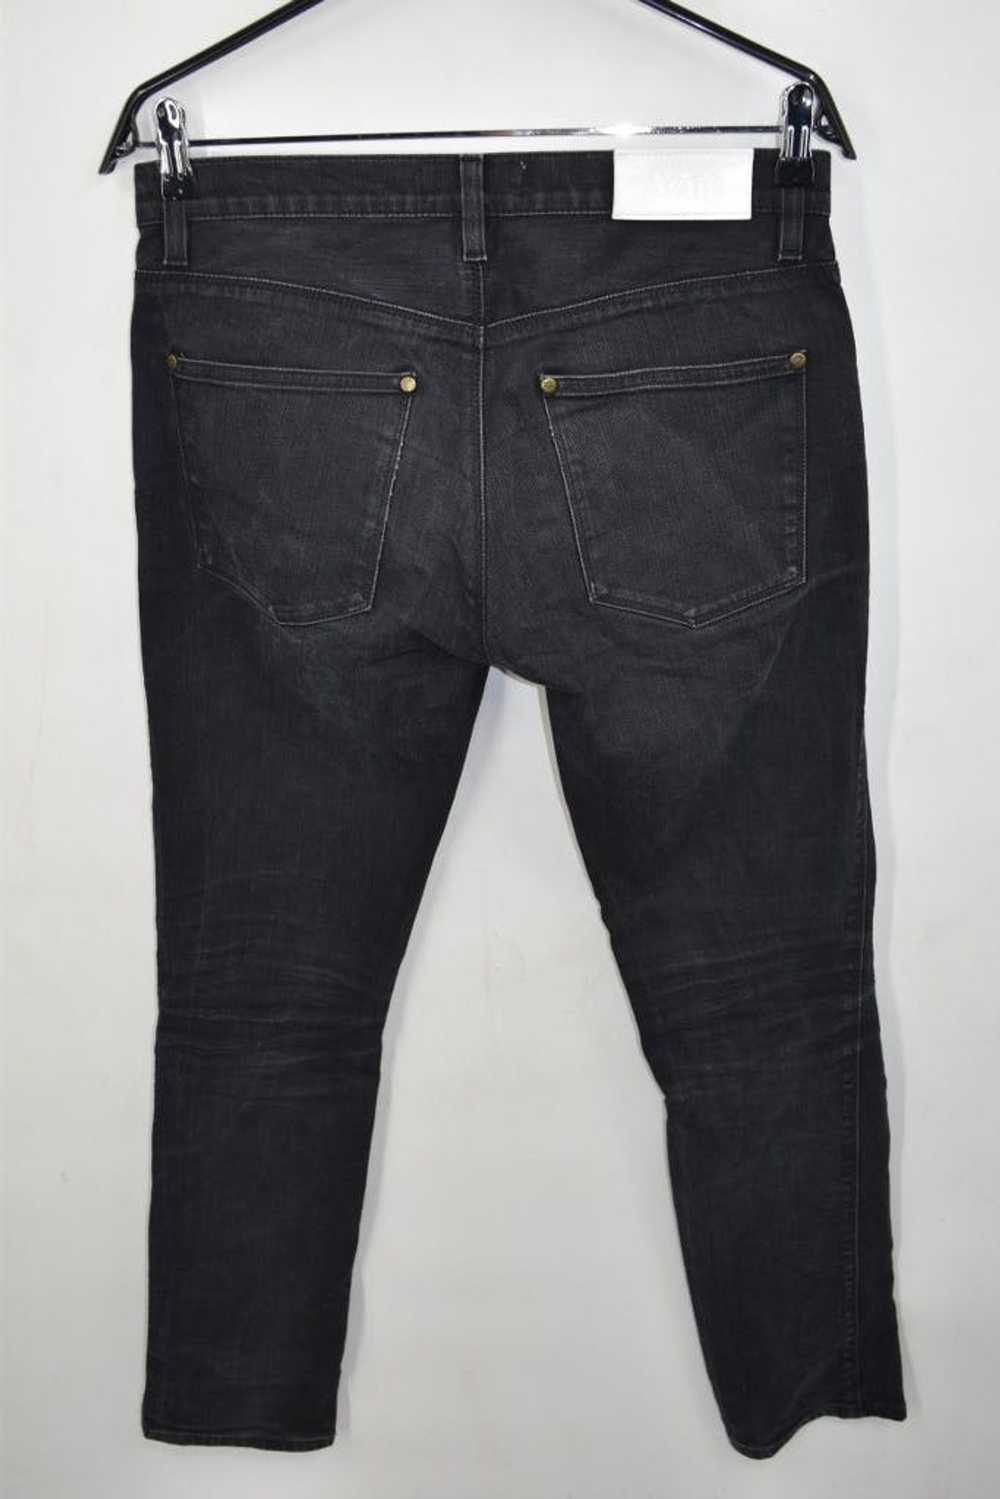 Acne Studios Acne MAX NEW CASH jeans (31/32) - image 5